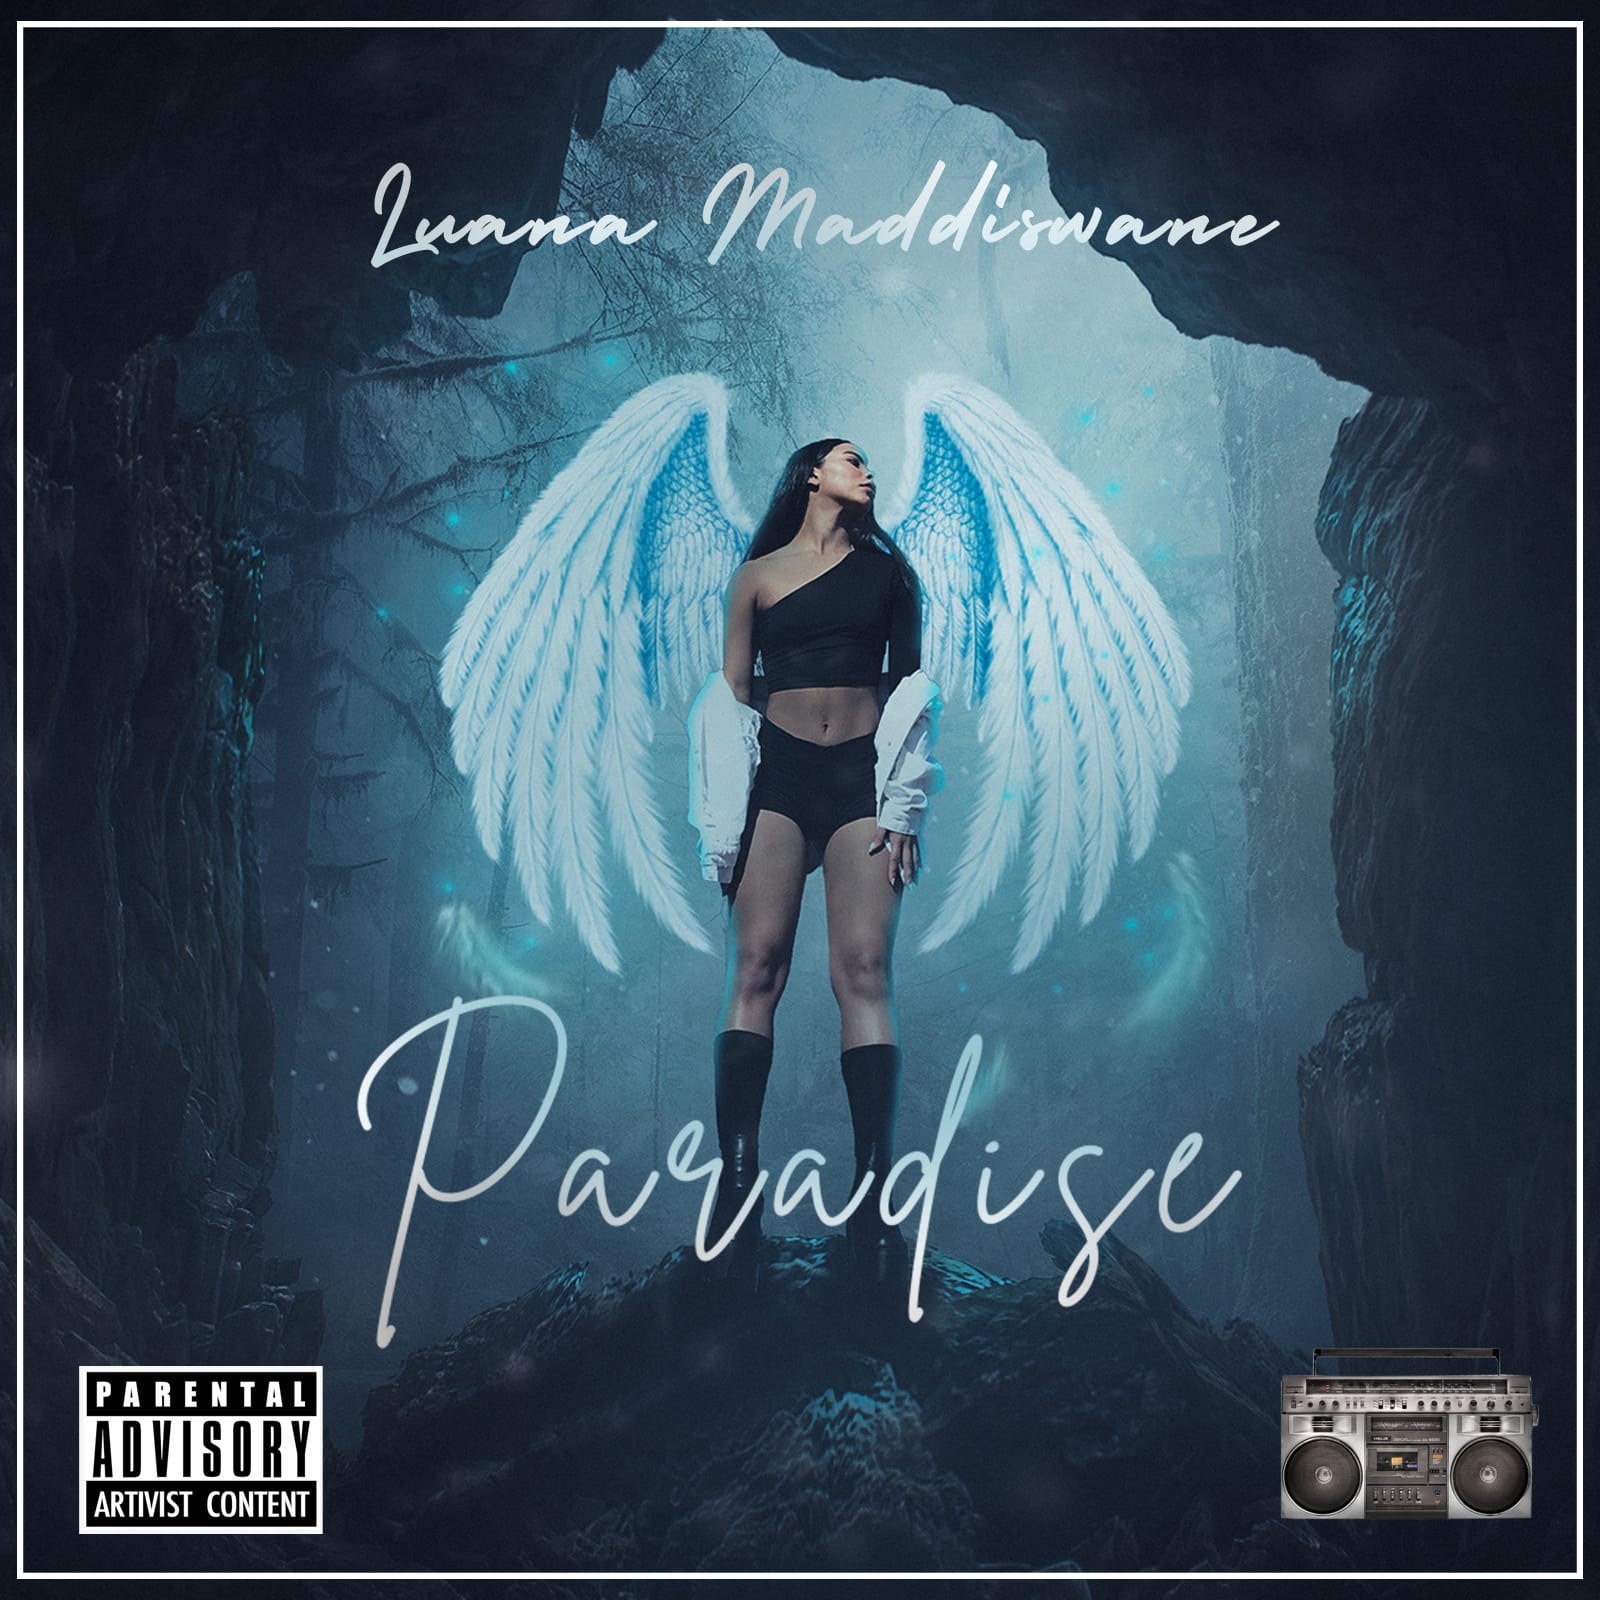 Paradise Music Album Covers - Photoshop PSD